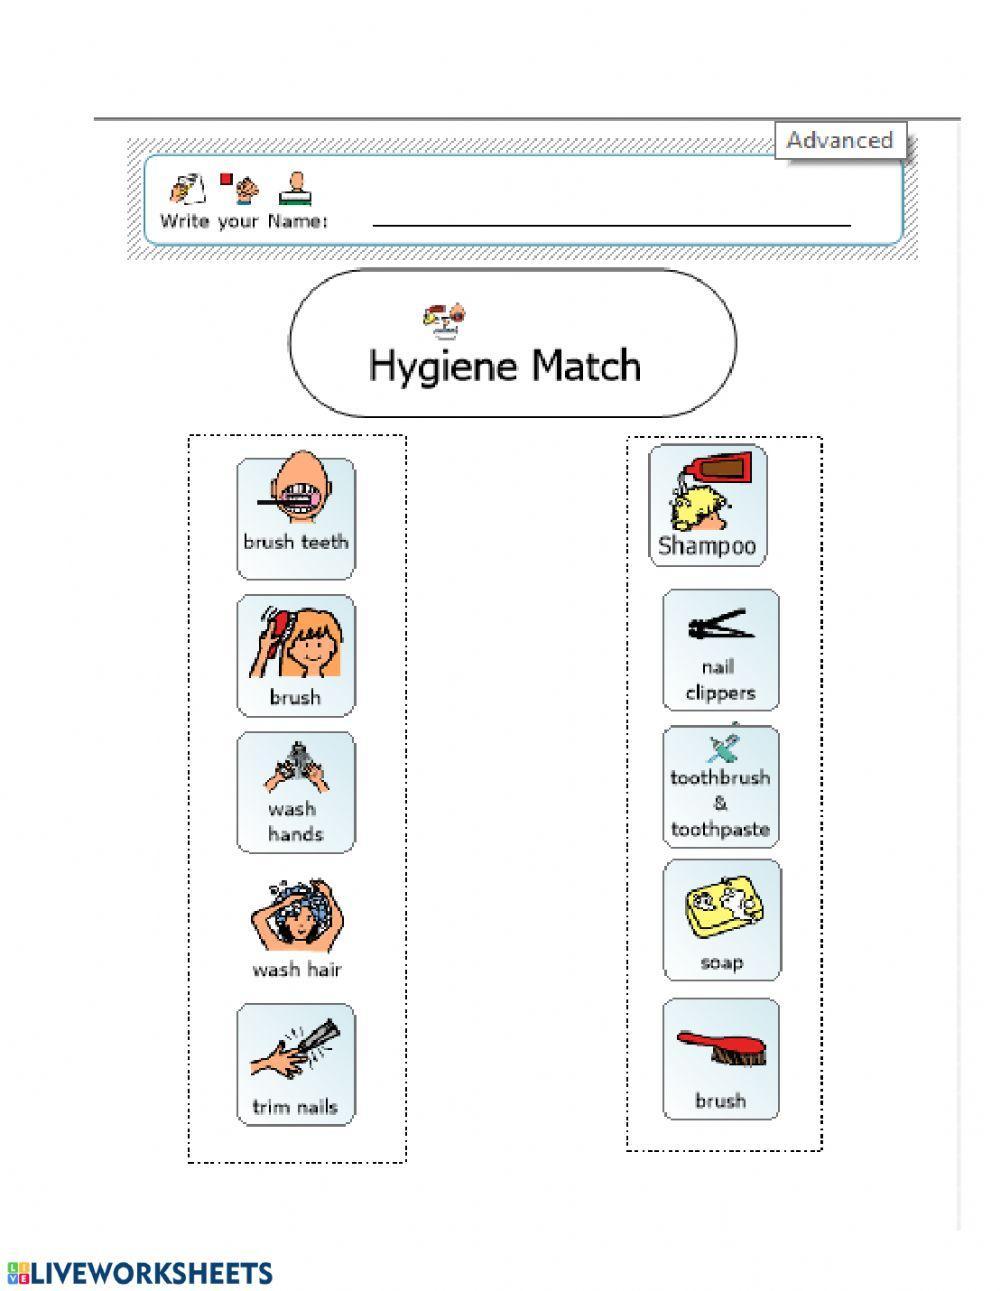 Hygiene Match